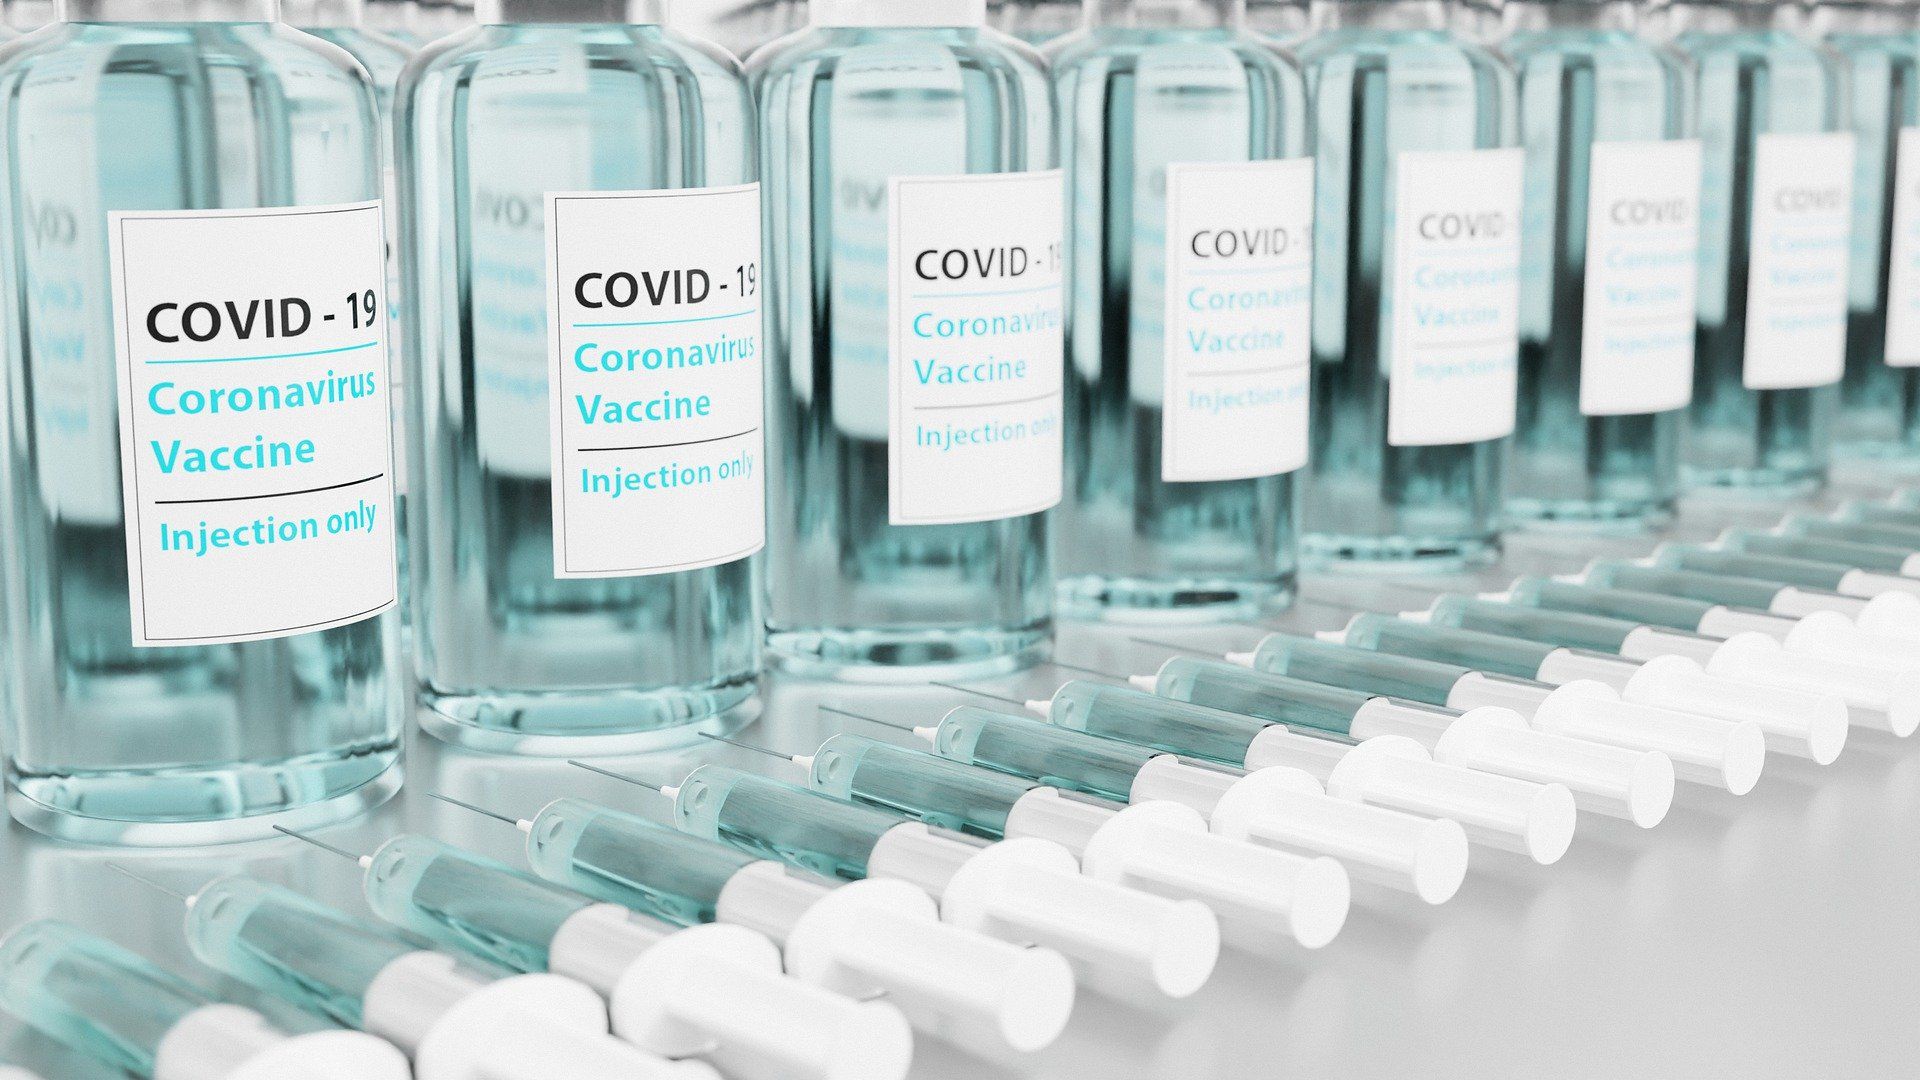 US plans to buy 100 million more Johnson & Johnson COVID-19 vaccine doses